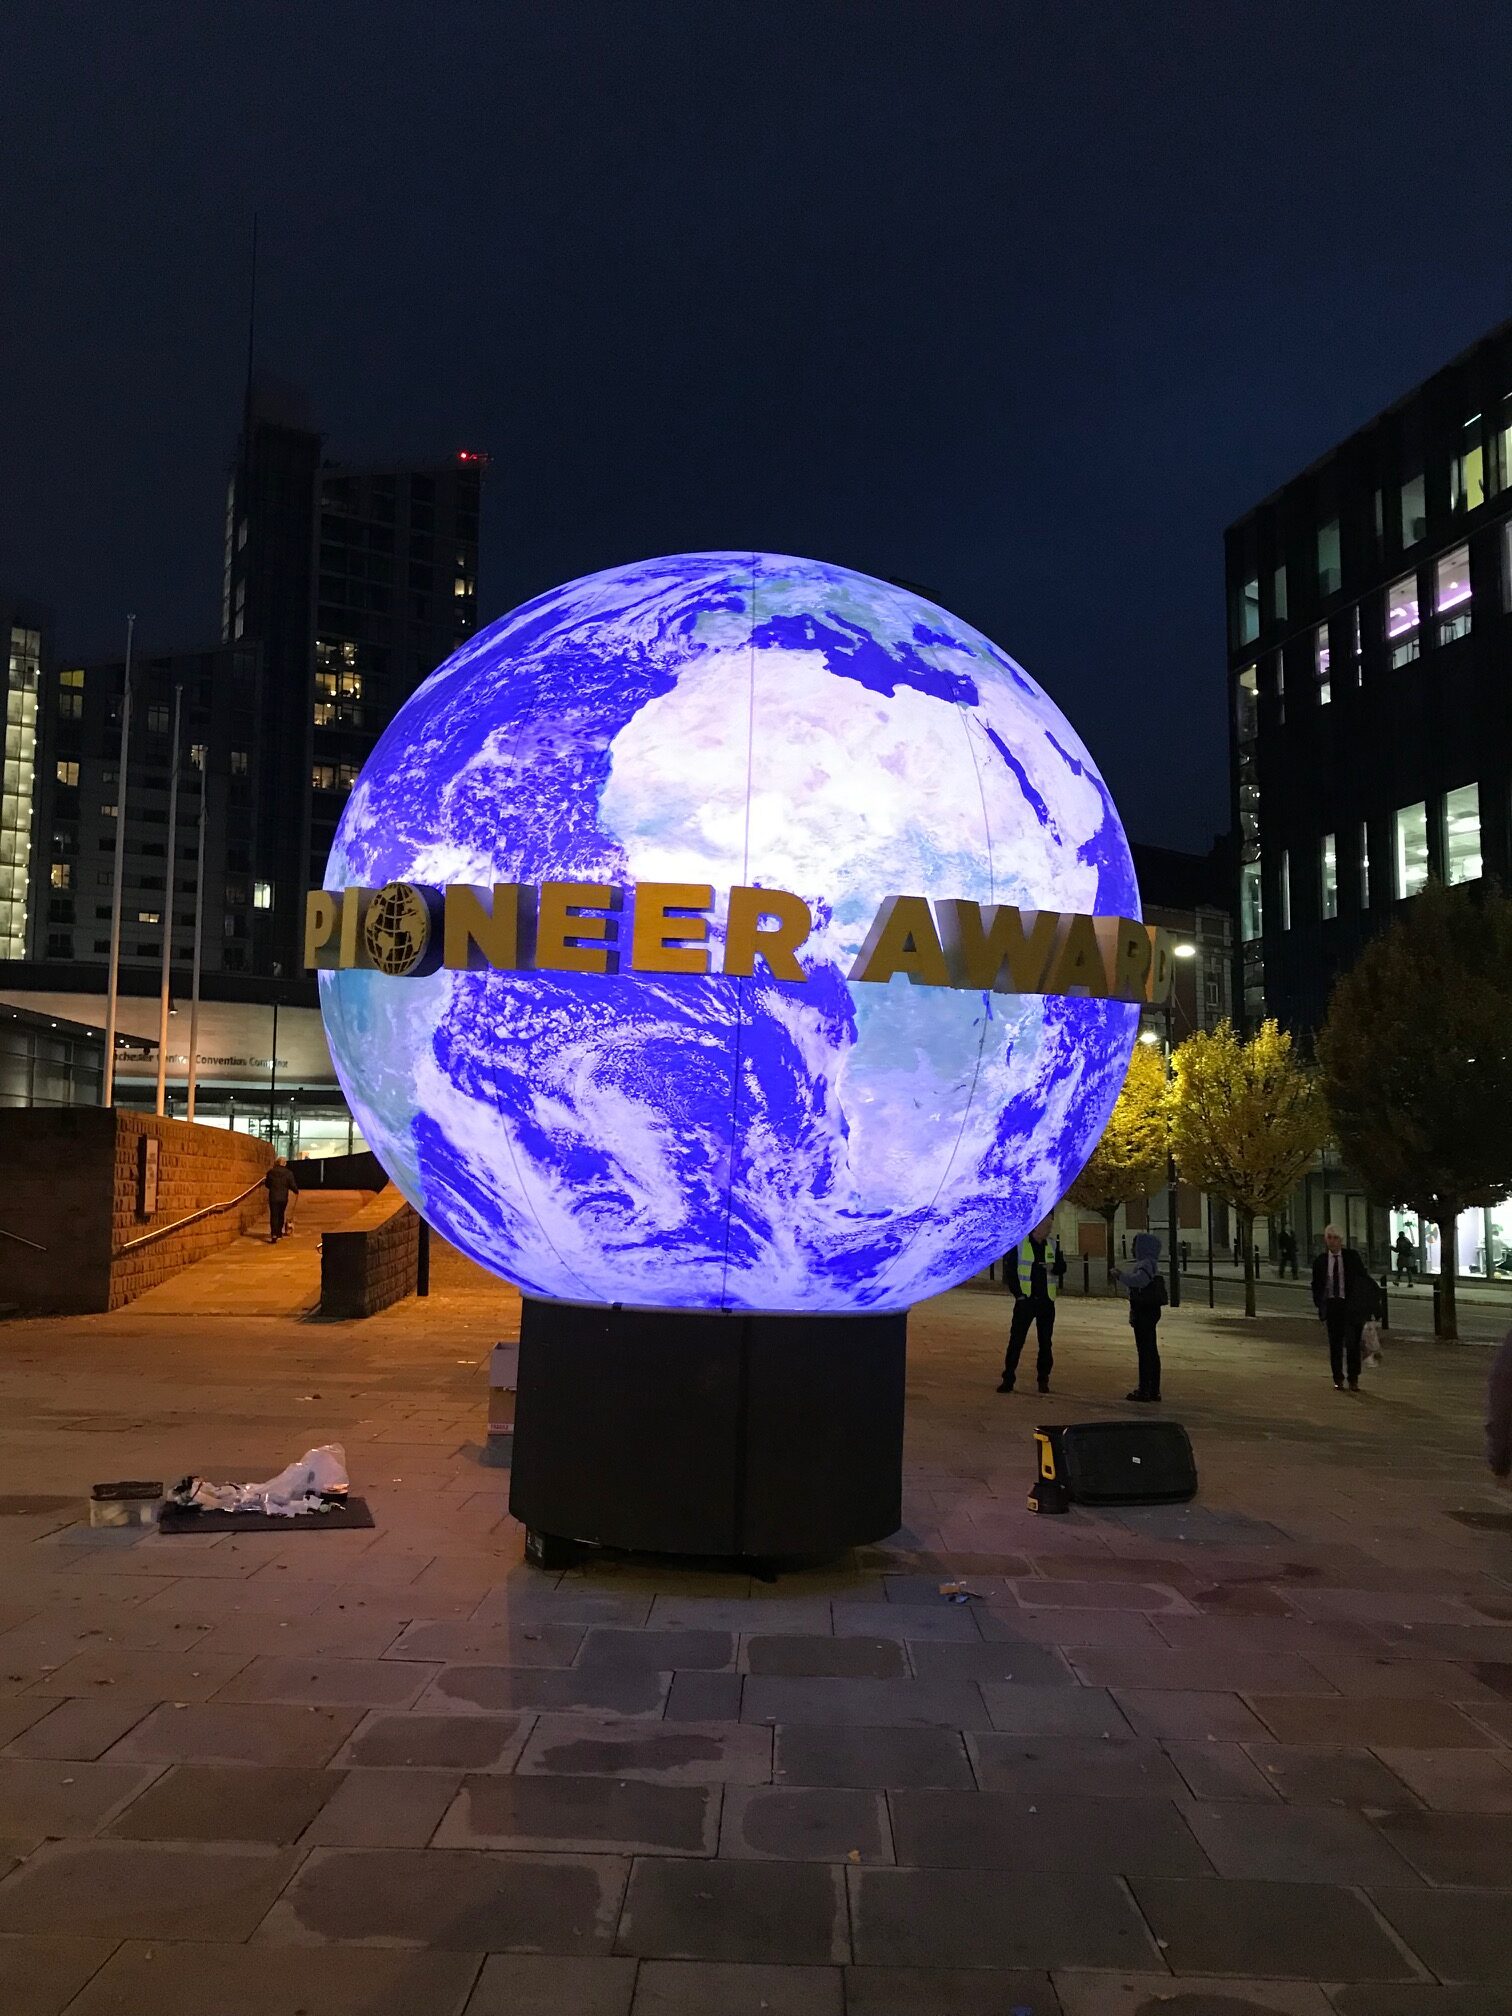 Pioneer Awards Inflatable Globe